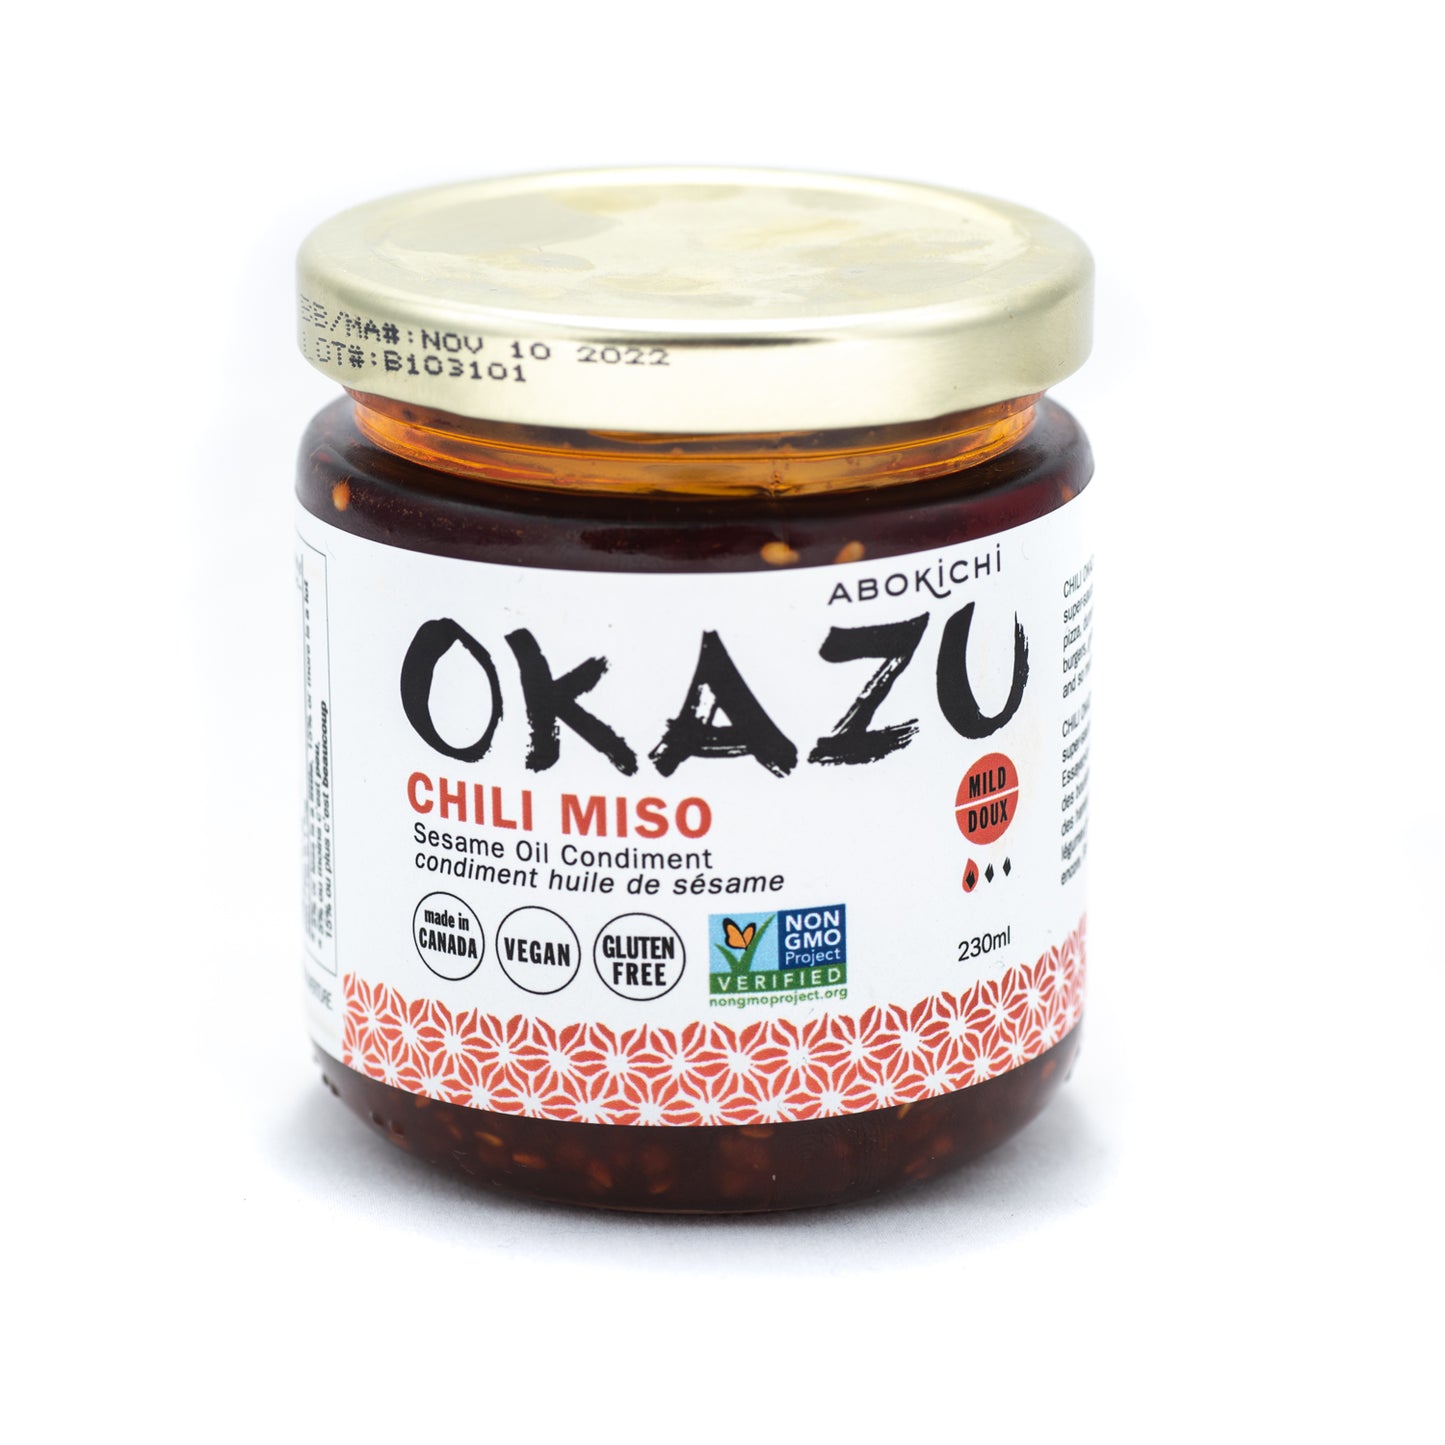 Okazu - Chili Miso